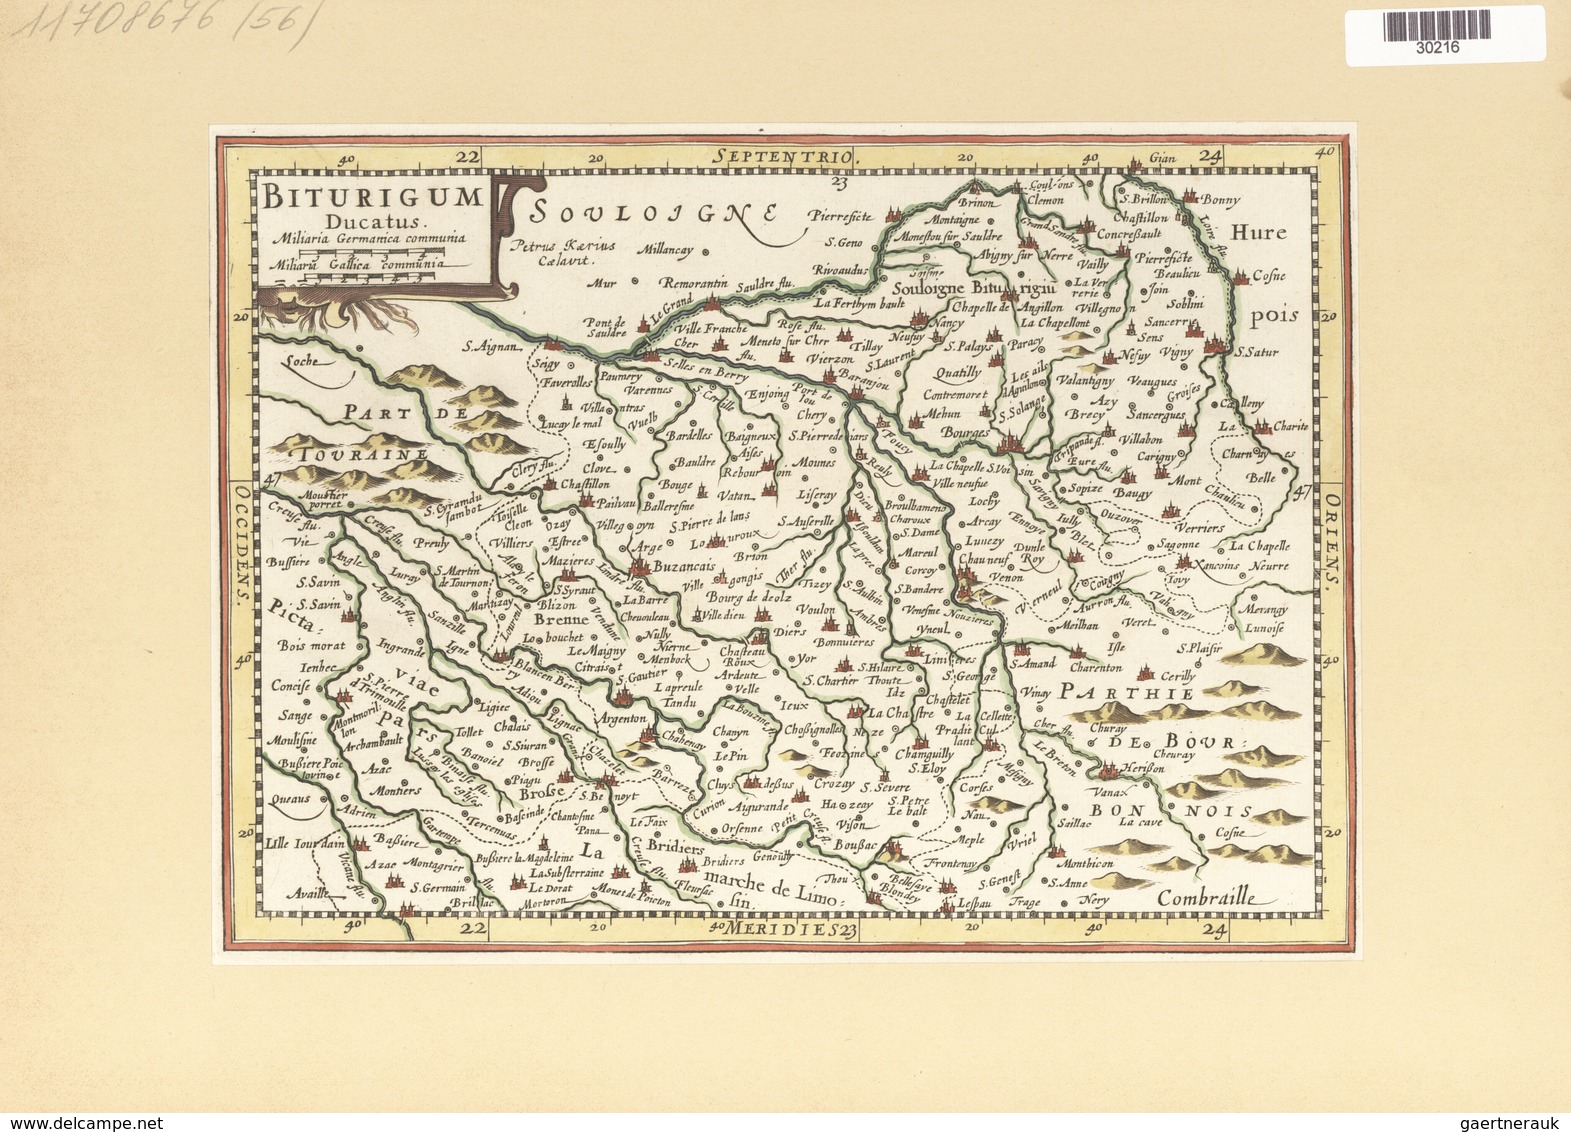 Landkarten Und Stiche: 1734. Biturgium Ducatus. Map Of The Bordeaux Region Of France, Published In T - Geography